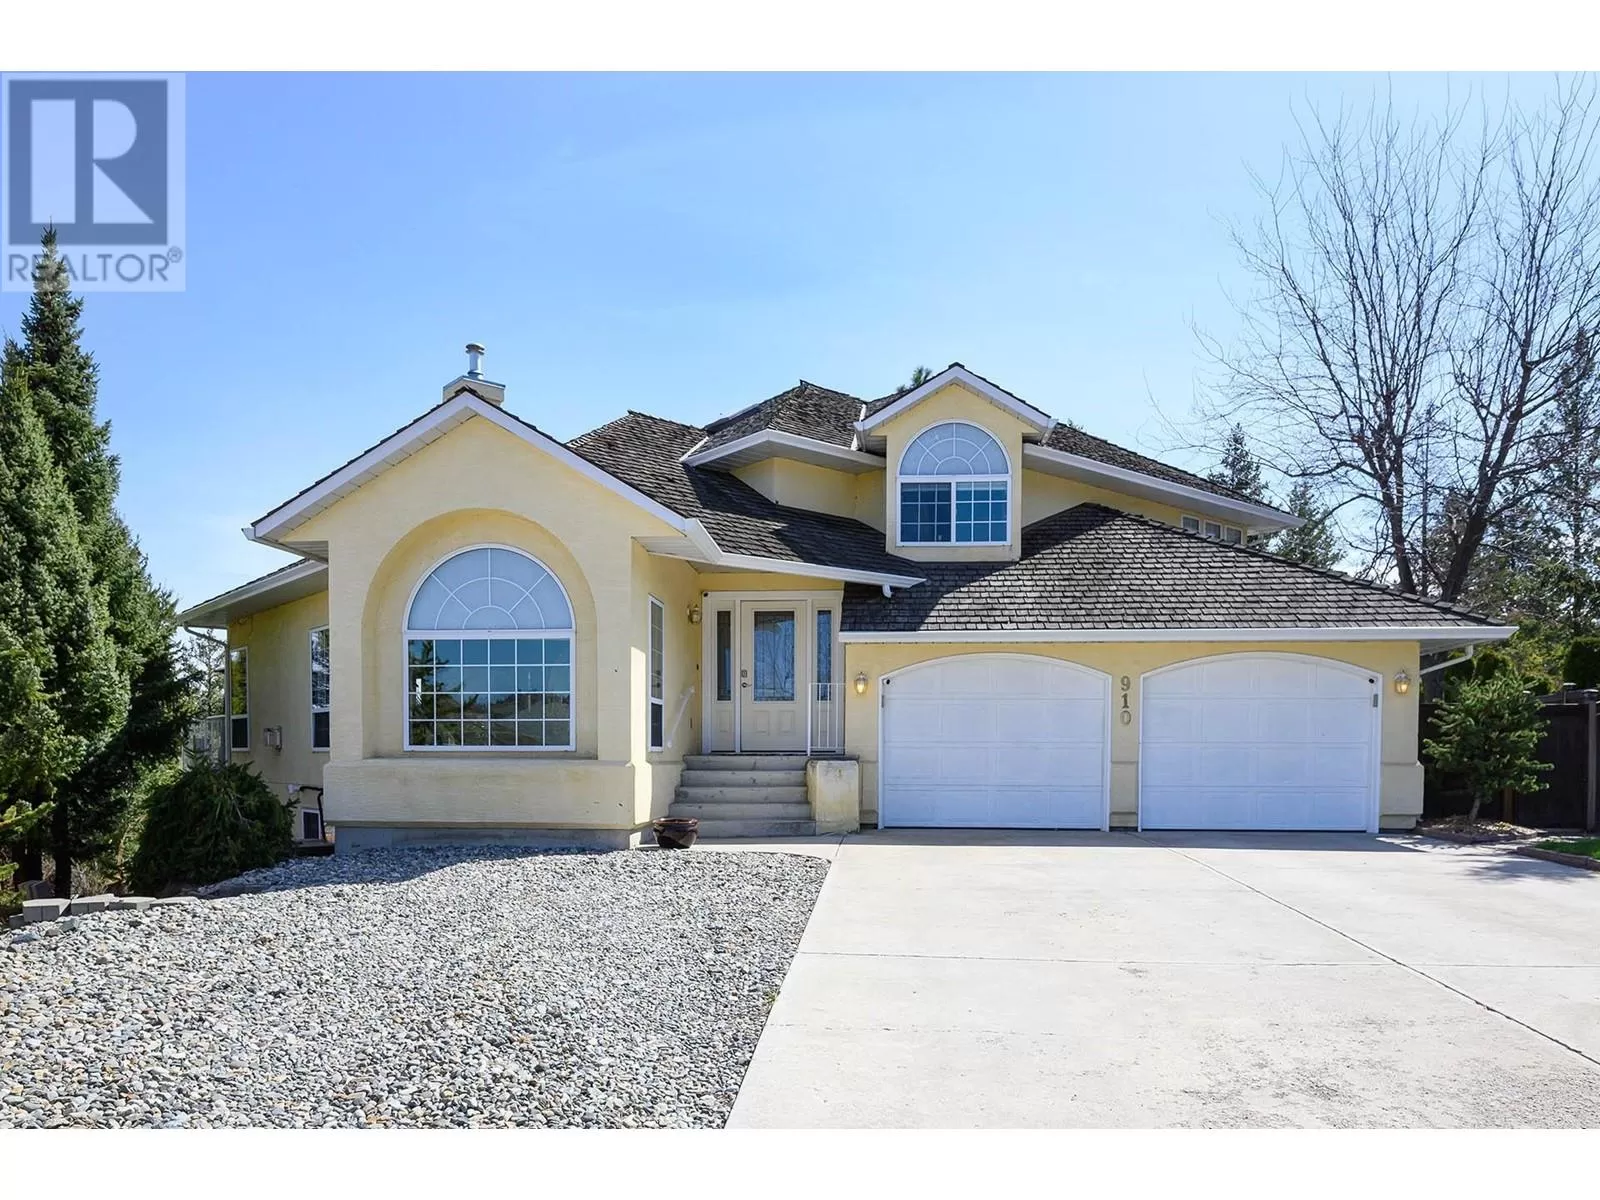 House for rent: 910 Heatherton Crt, Kamloops, British Columbia V1S 1P9